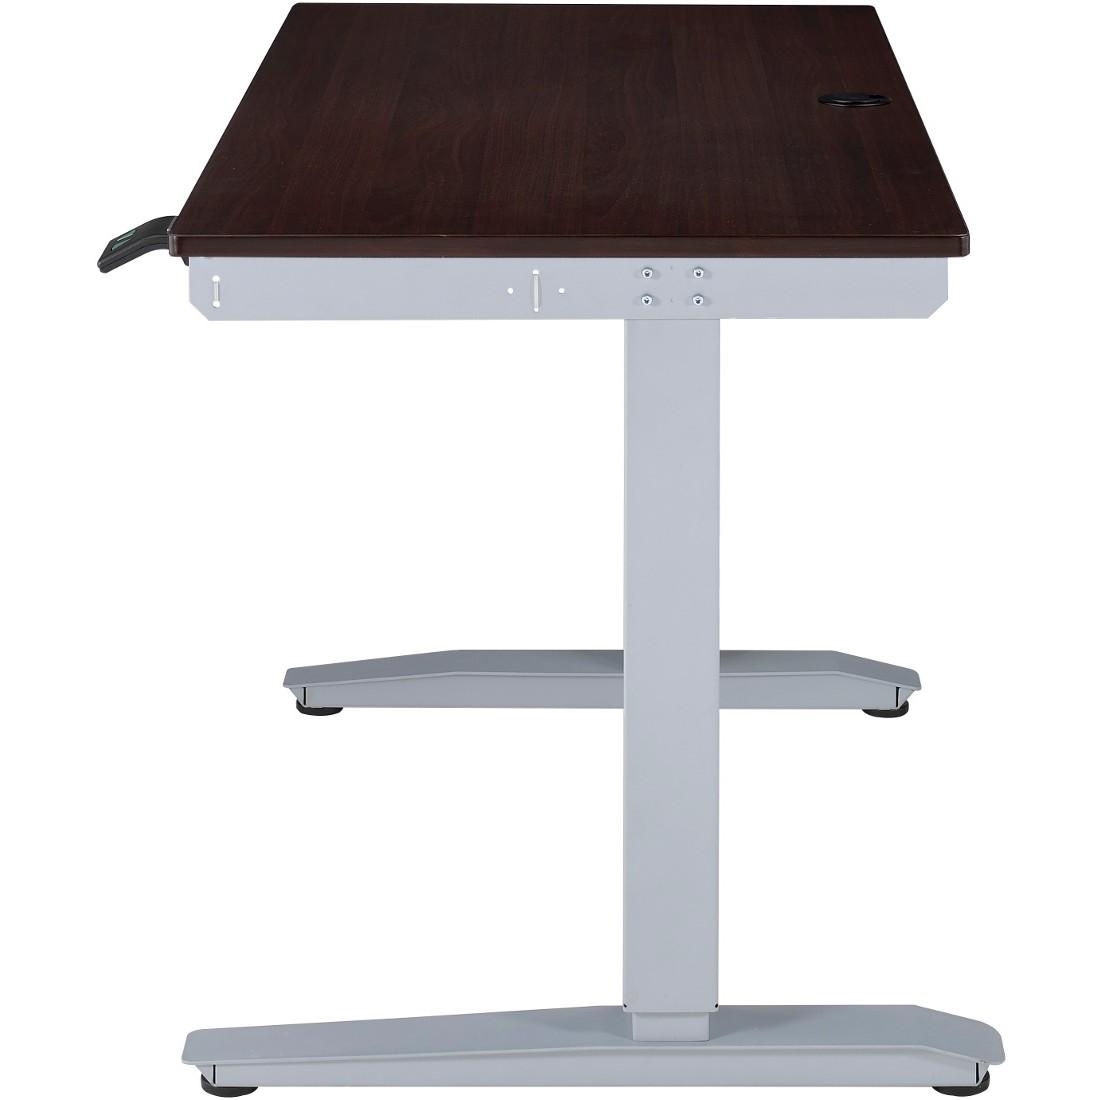 

    
Bliss 92380 Acme Furniture Writing Desk
